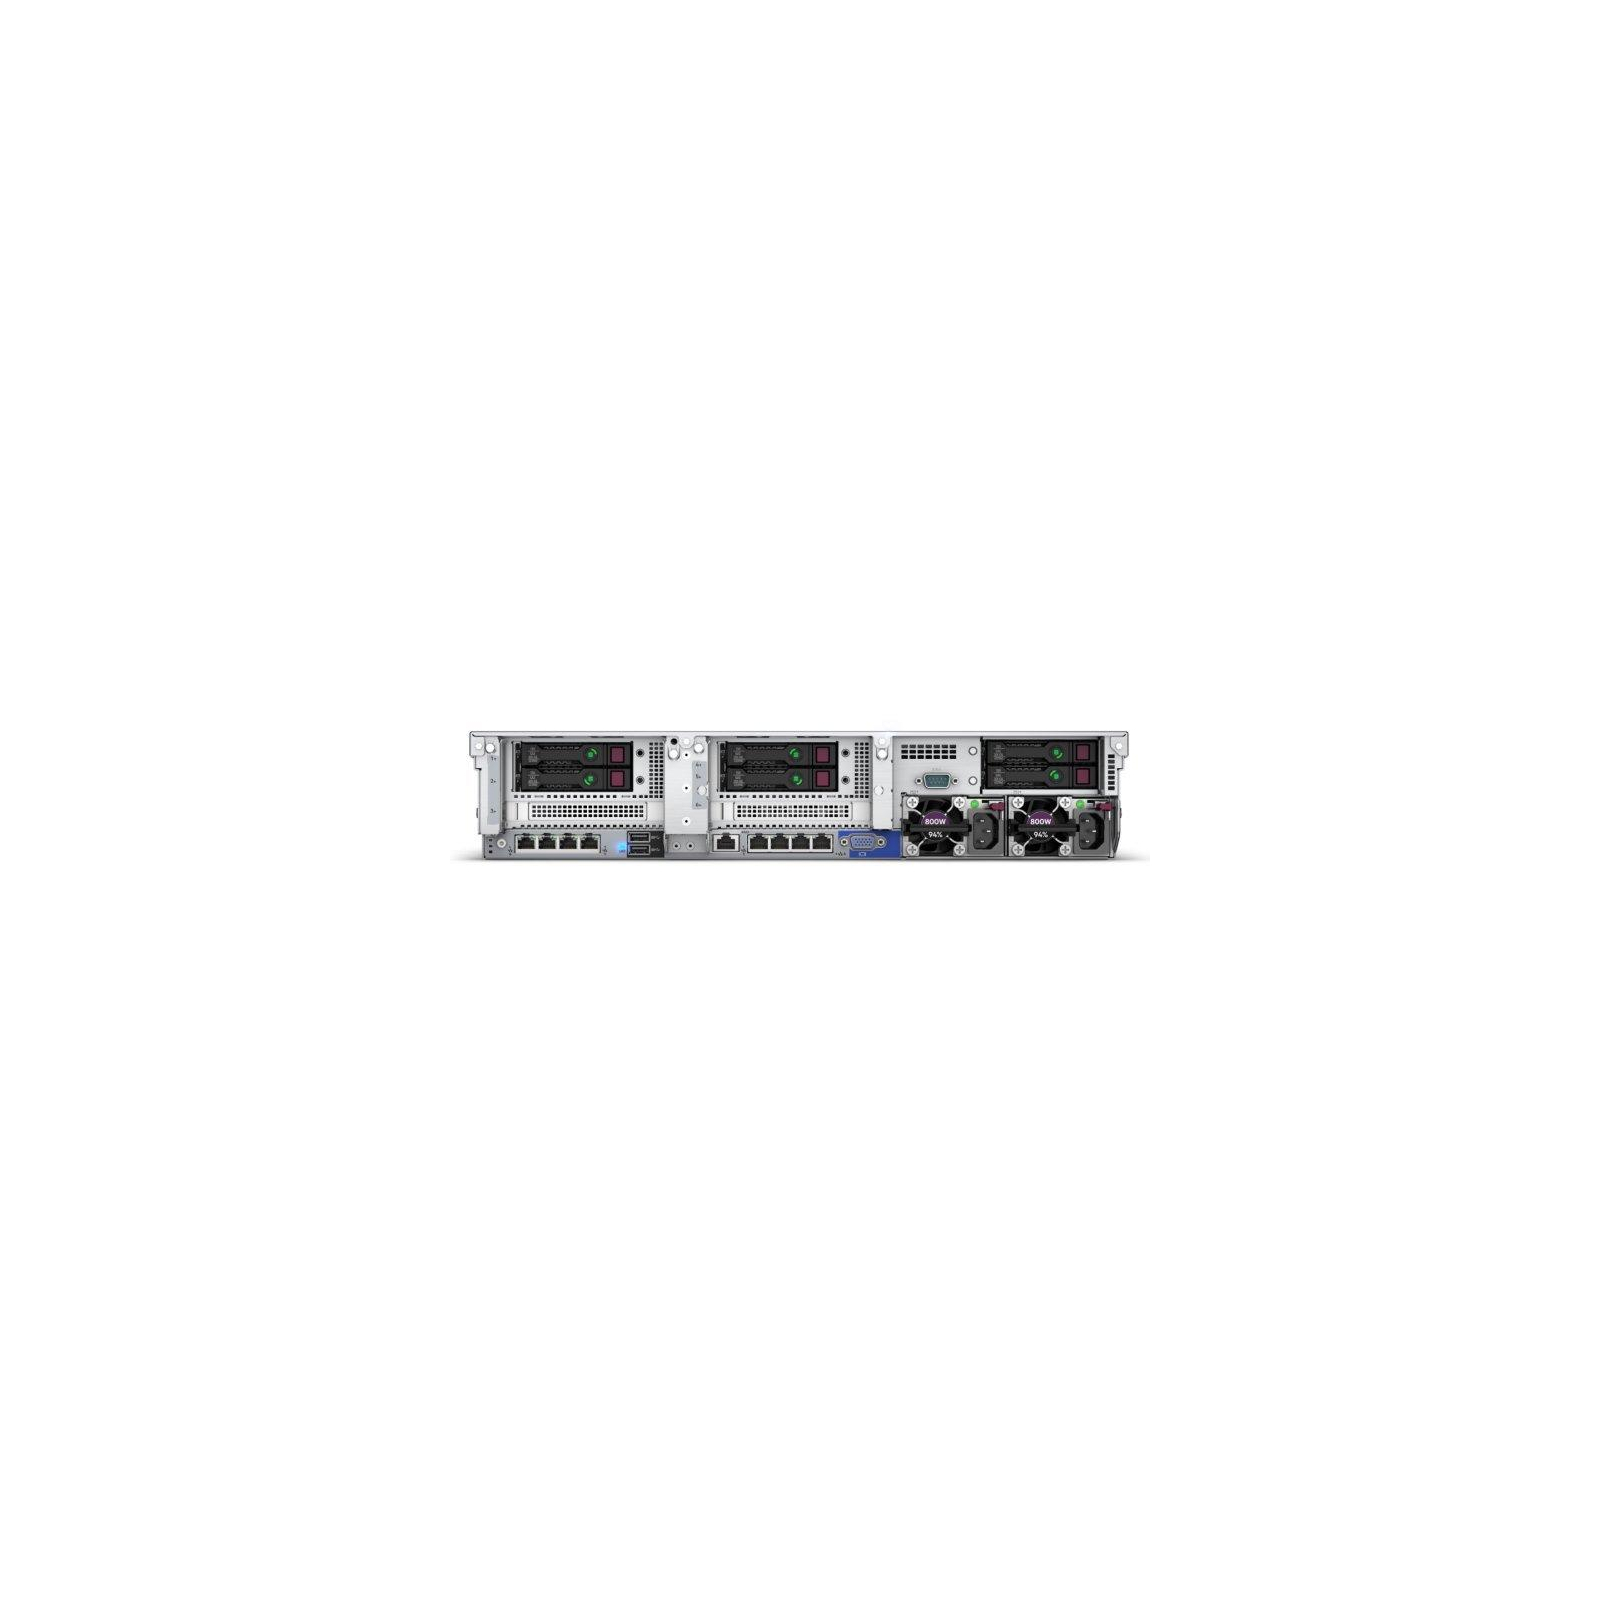 Сервер Hewlett Packard Enterprise DL380 Gen10 (P06421-B21) изображение 3